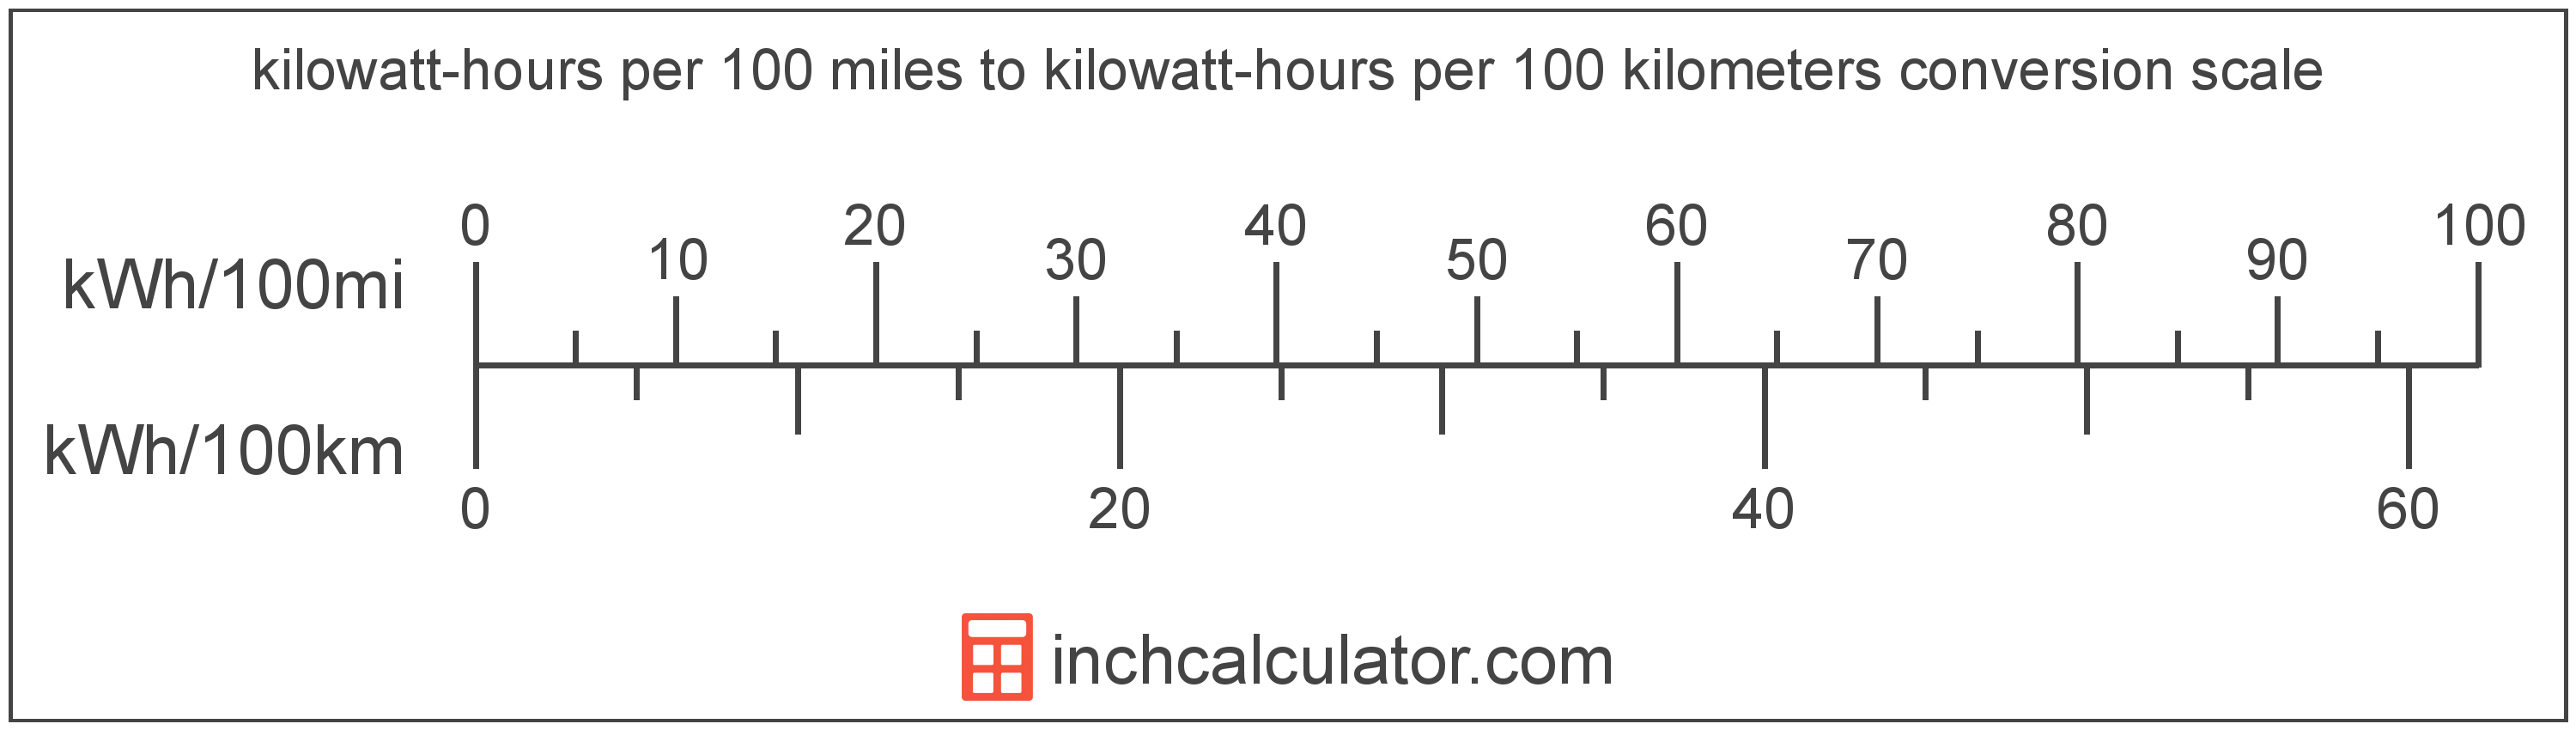 conversion scale showing kilowatt-hours per 100 kilometers and equivalent kilowatt-hours per 100 miles electric car efficiency values